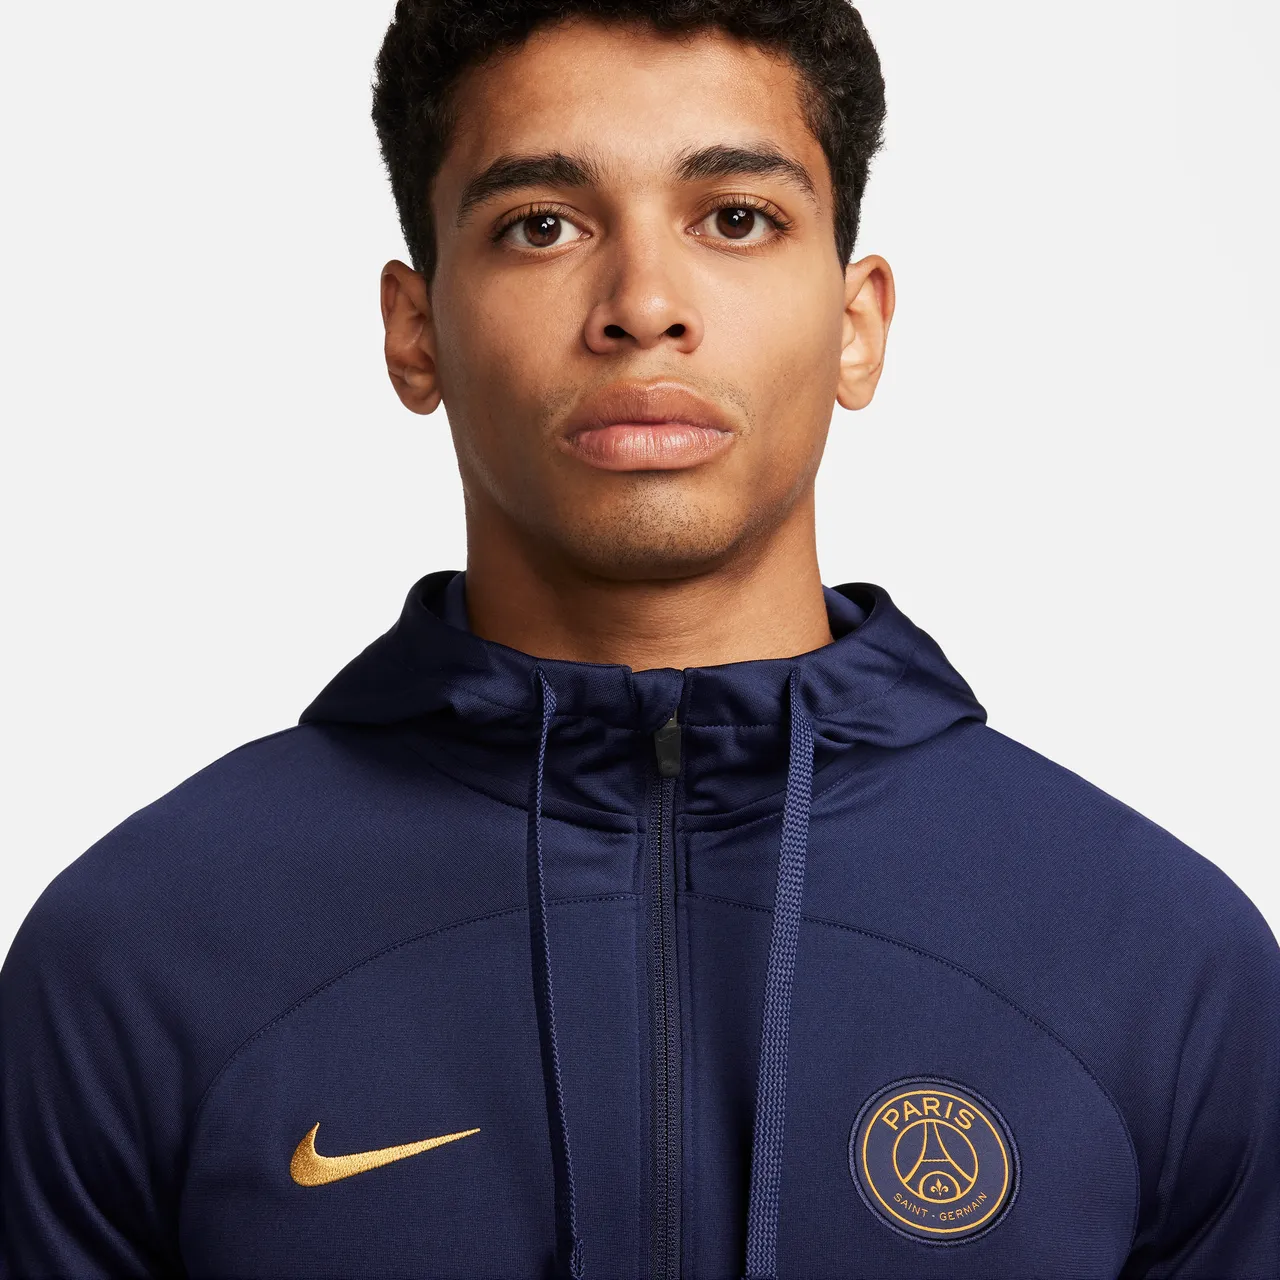 Paris Saint-Germain Strike Nike Dri-FIT Fußball-Trainingsanzug mit Kapuze für Herren - Blau